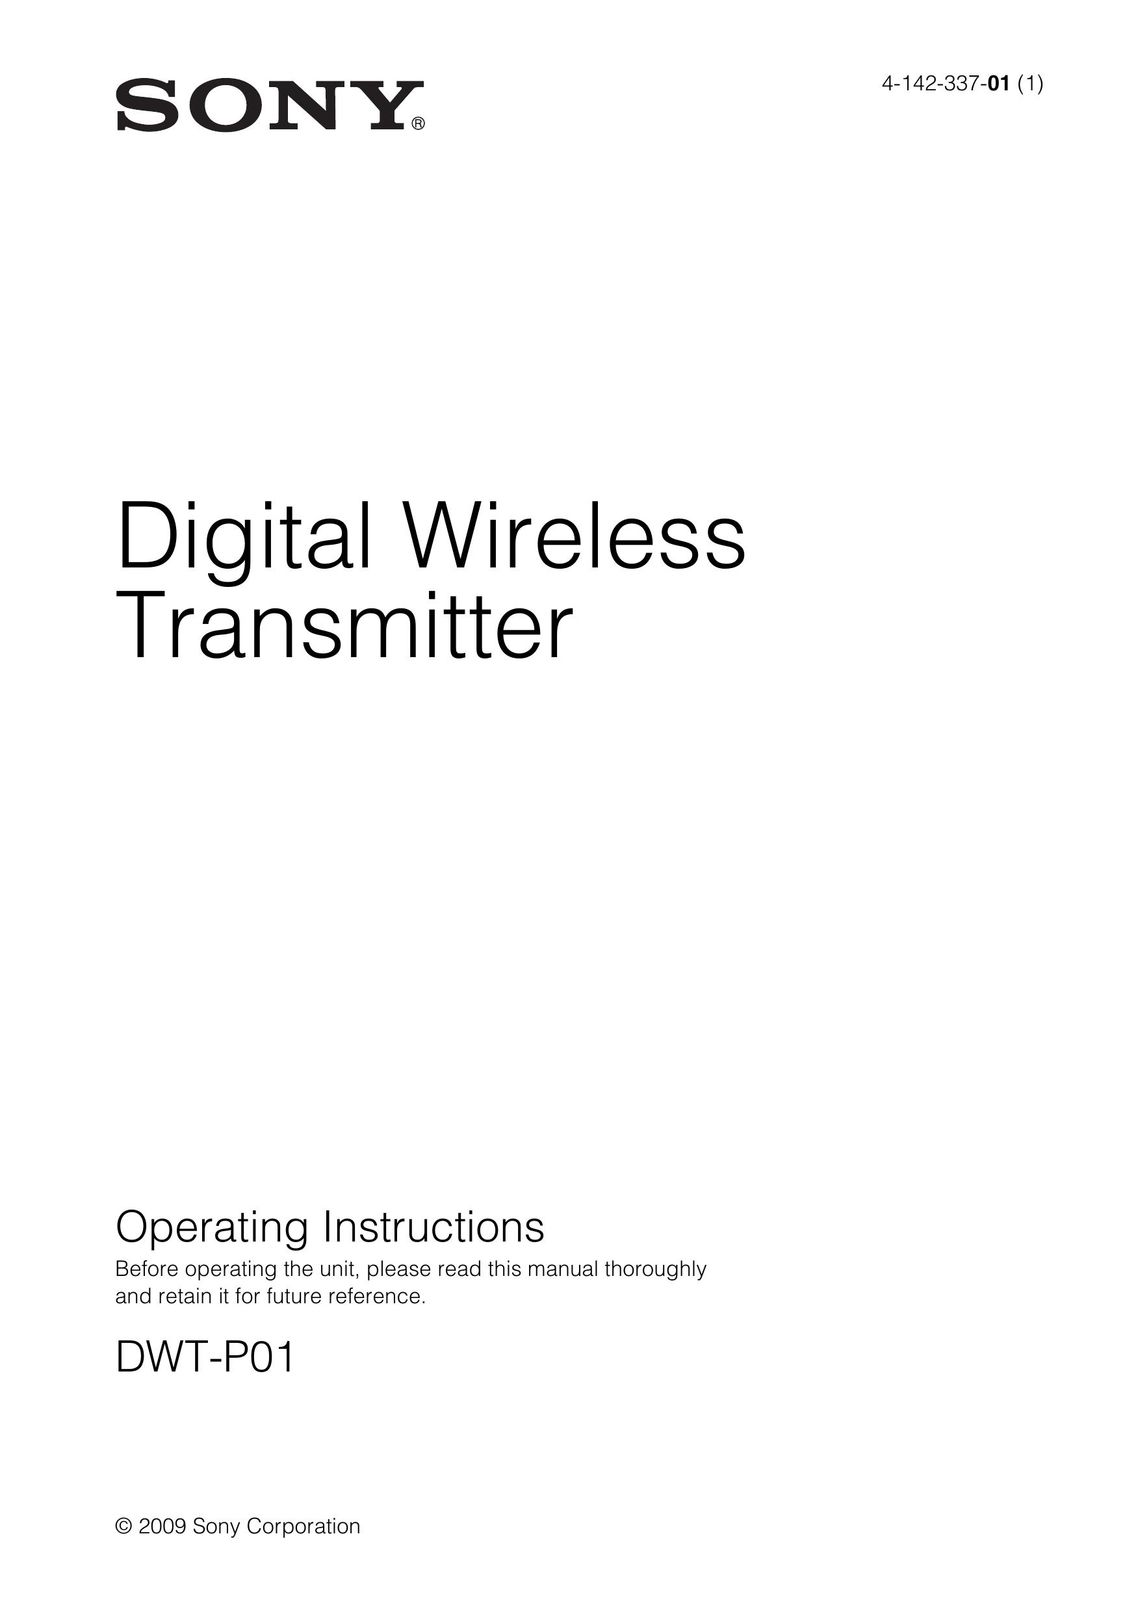 Sony DWT-P01 Satellite Radio User Manual